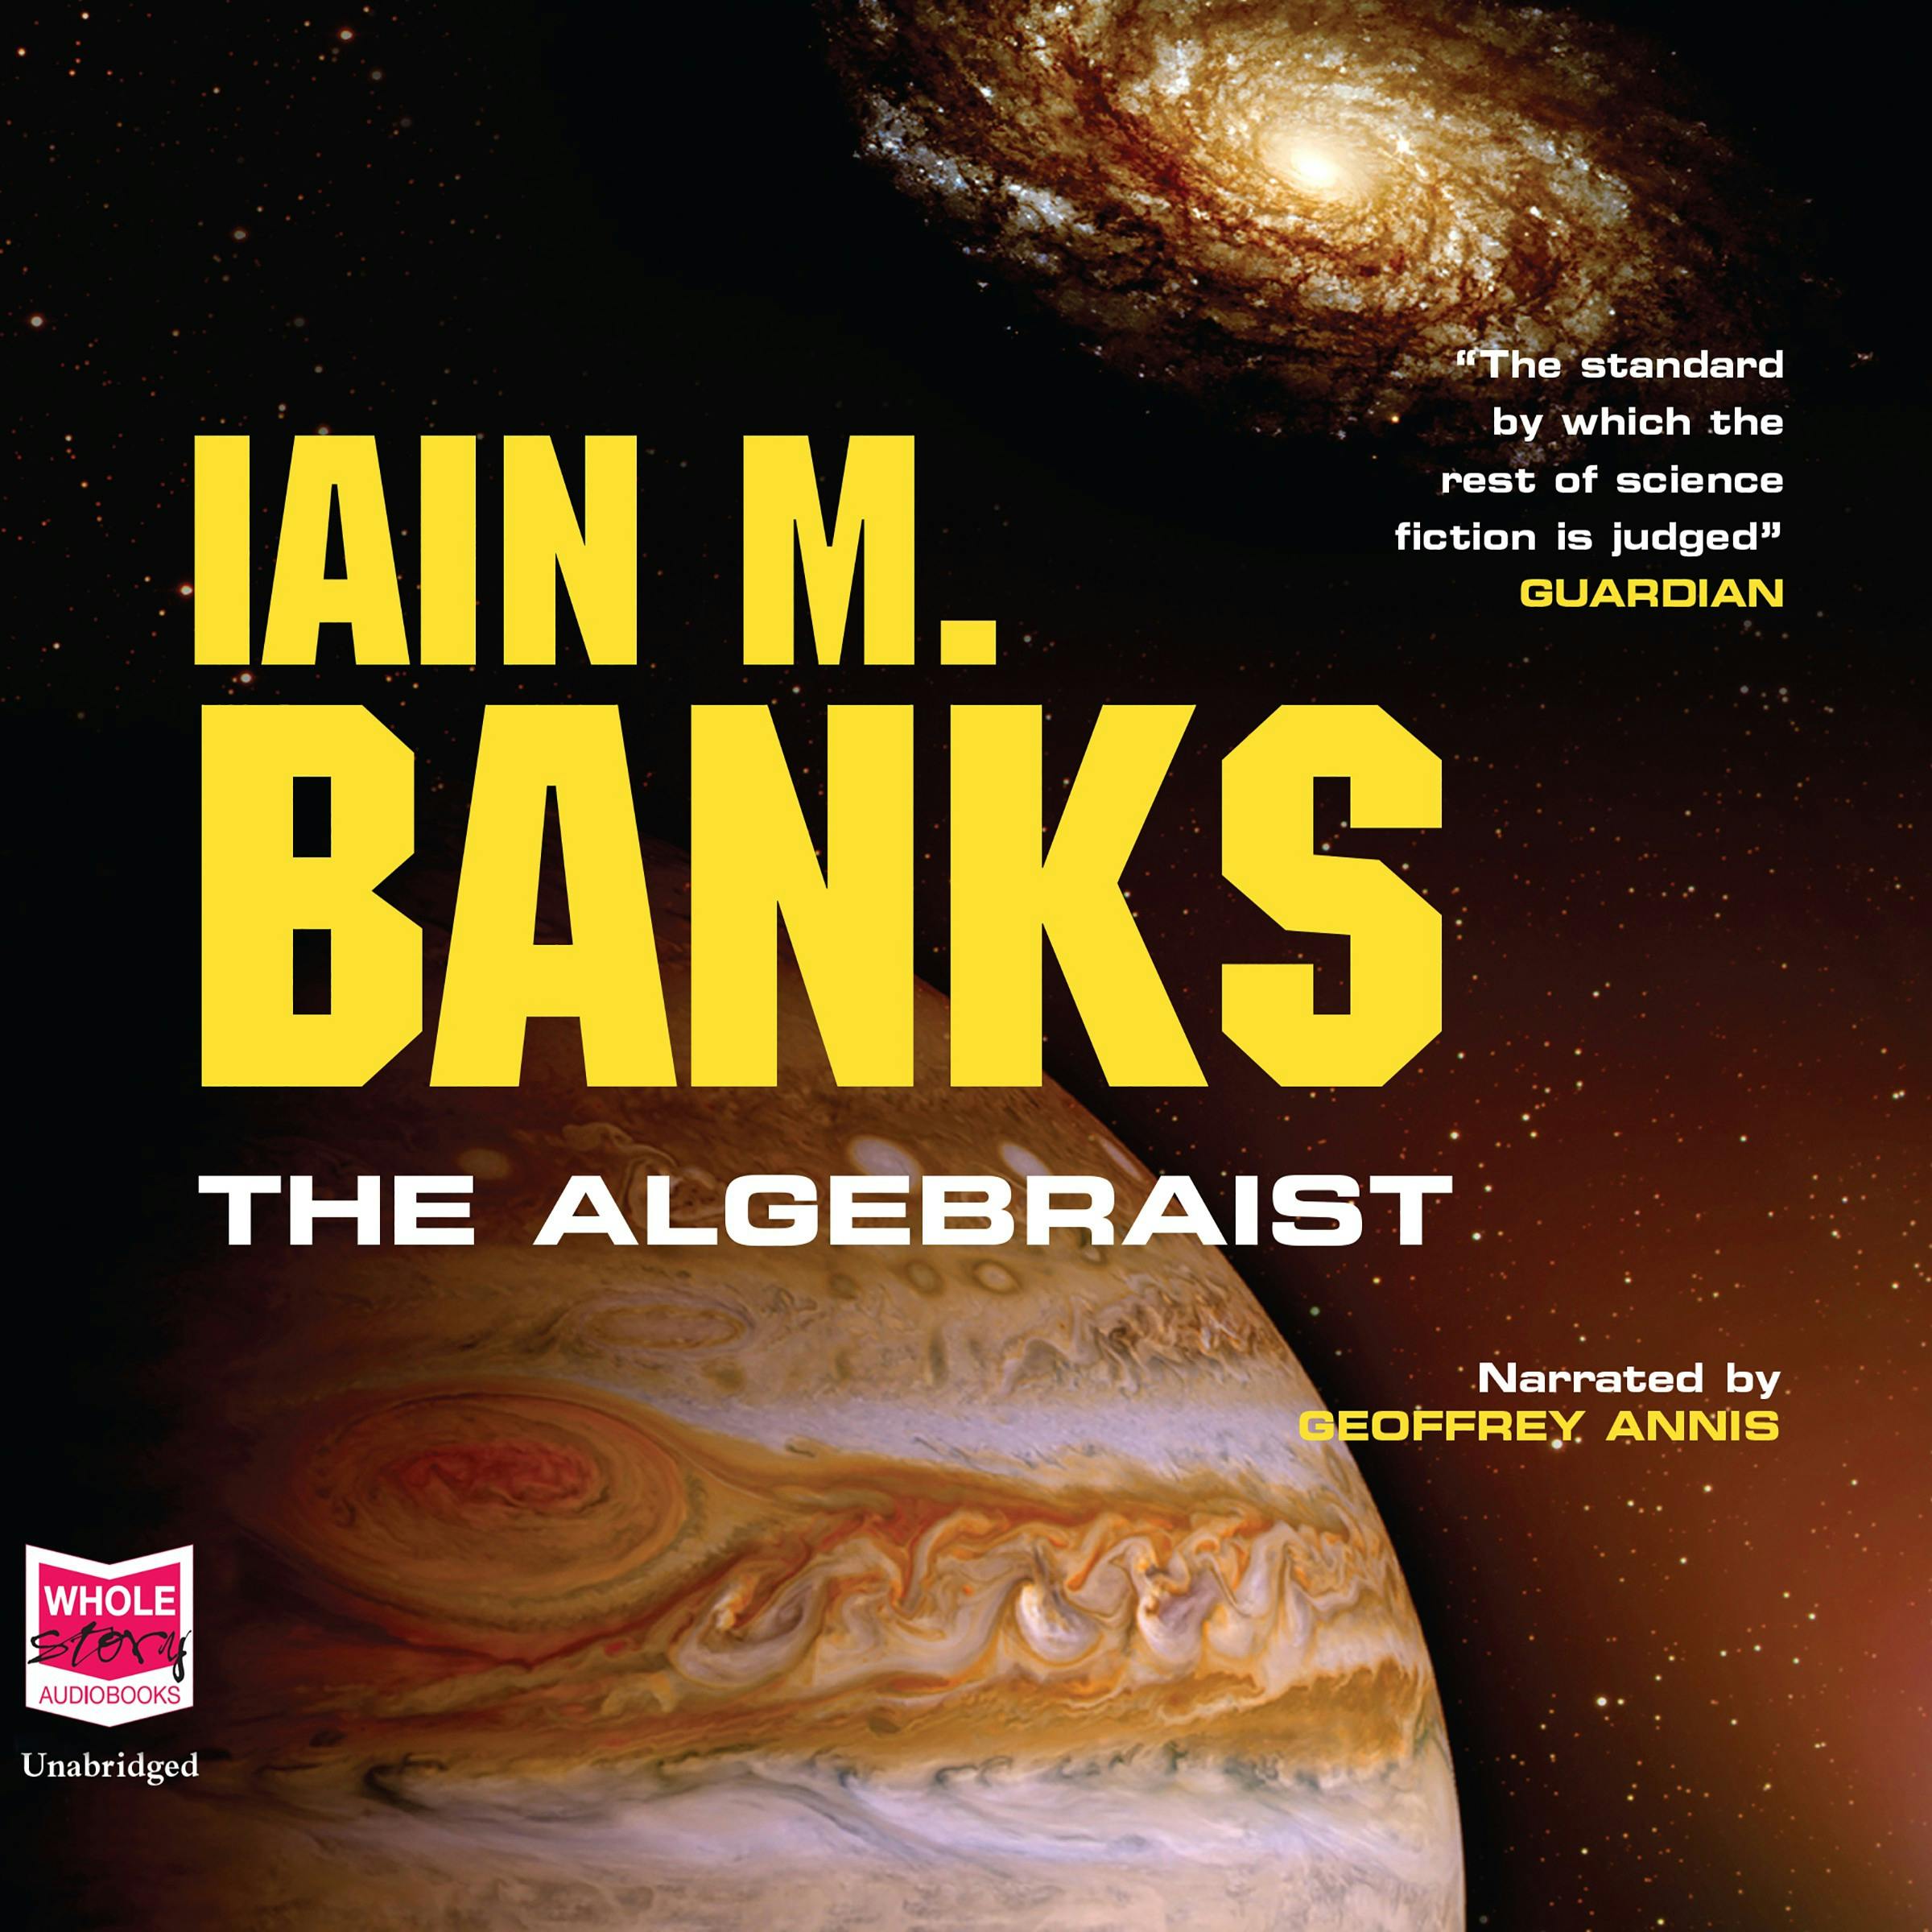 The Algebraist - Ian M. Banks